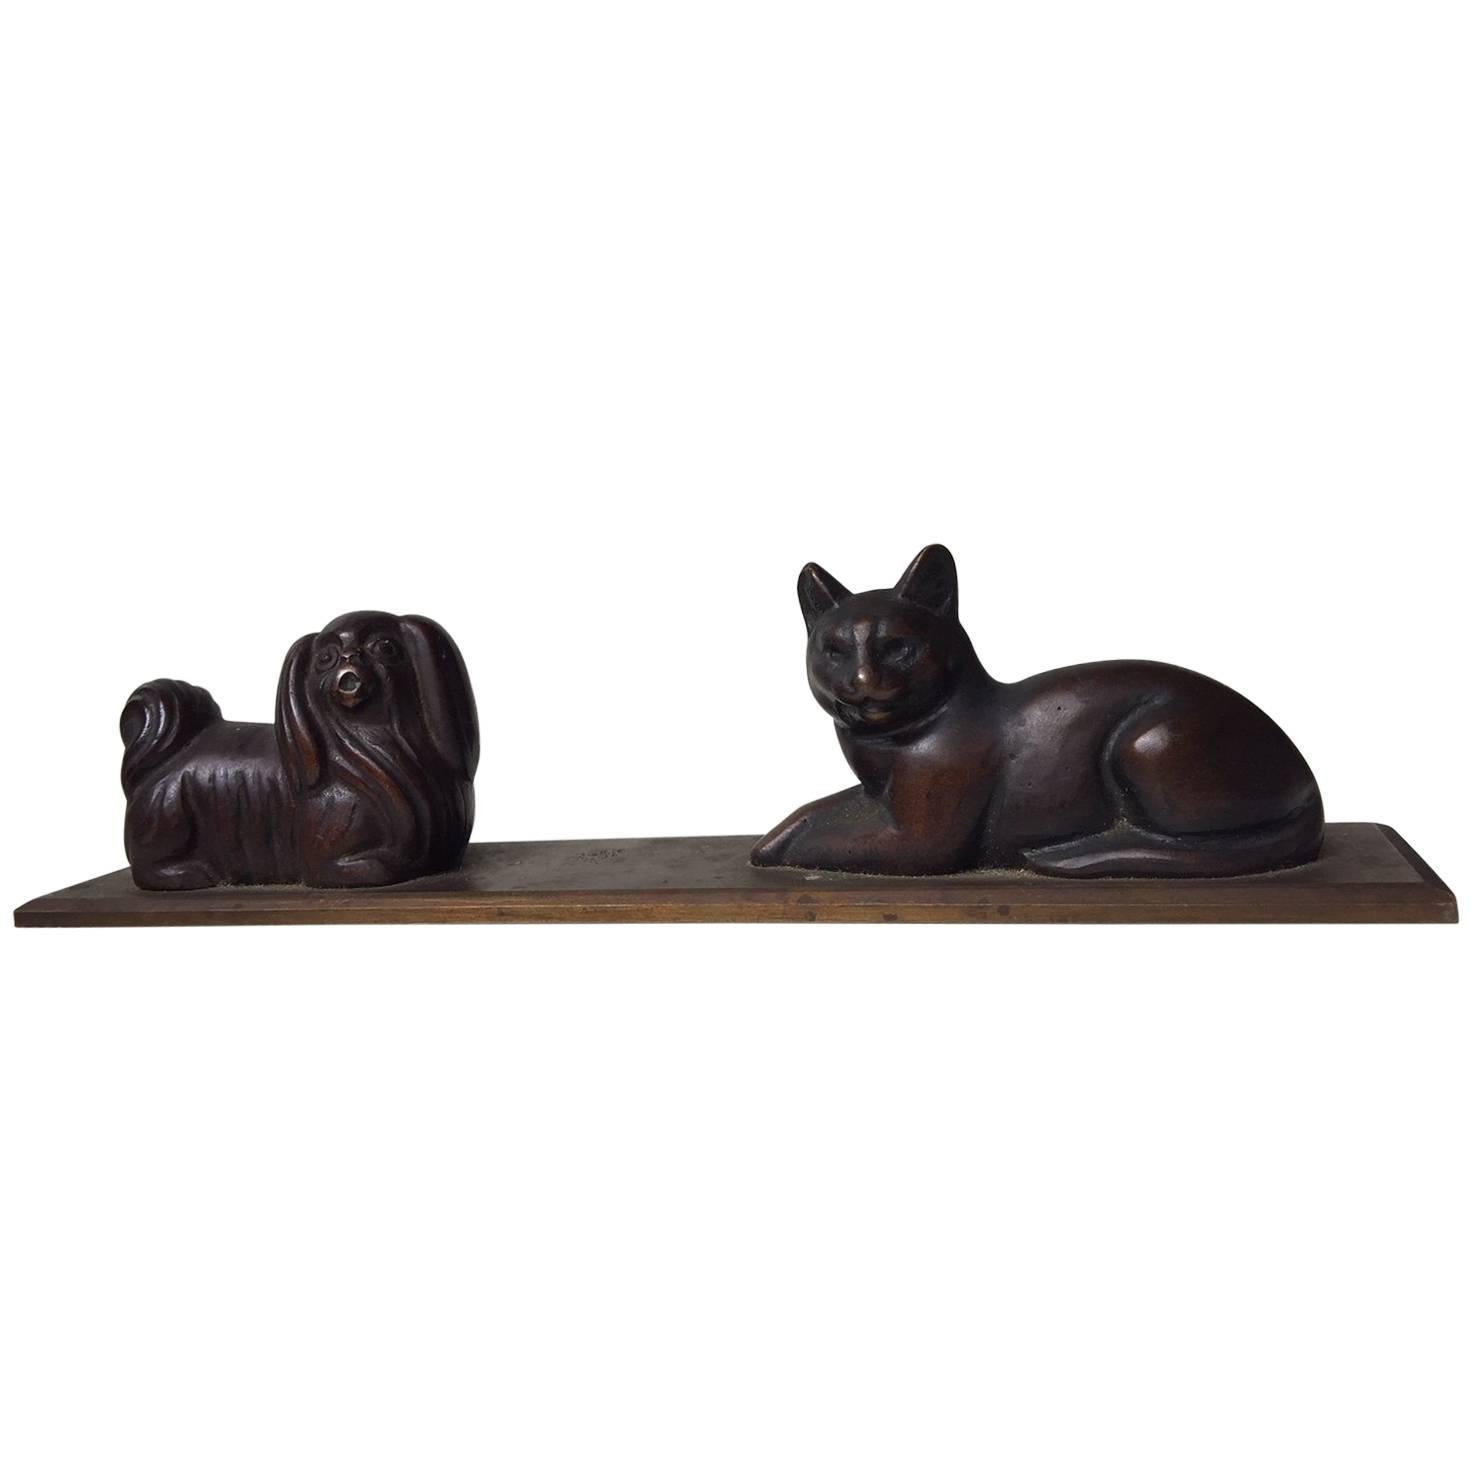 Pekingese Dog & Cat Cast Bronze Paperweight - Desk Ornament, 1930s, Scandinavia